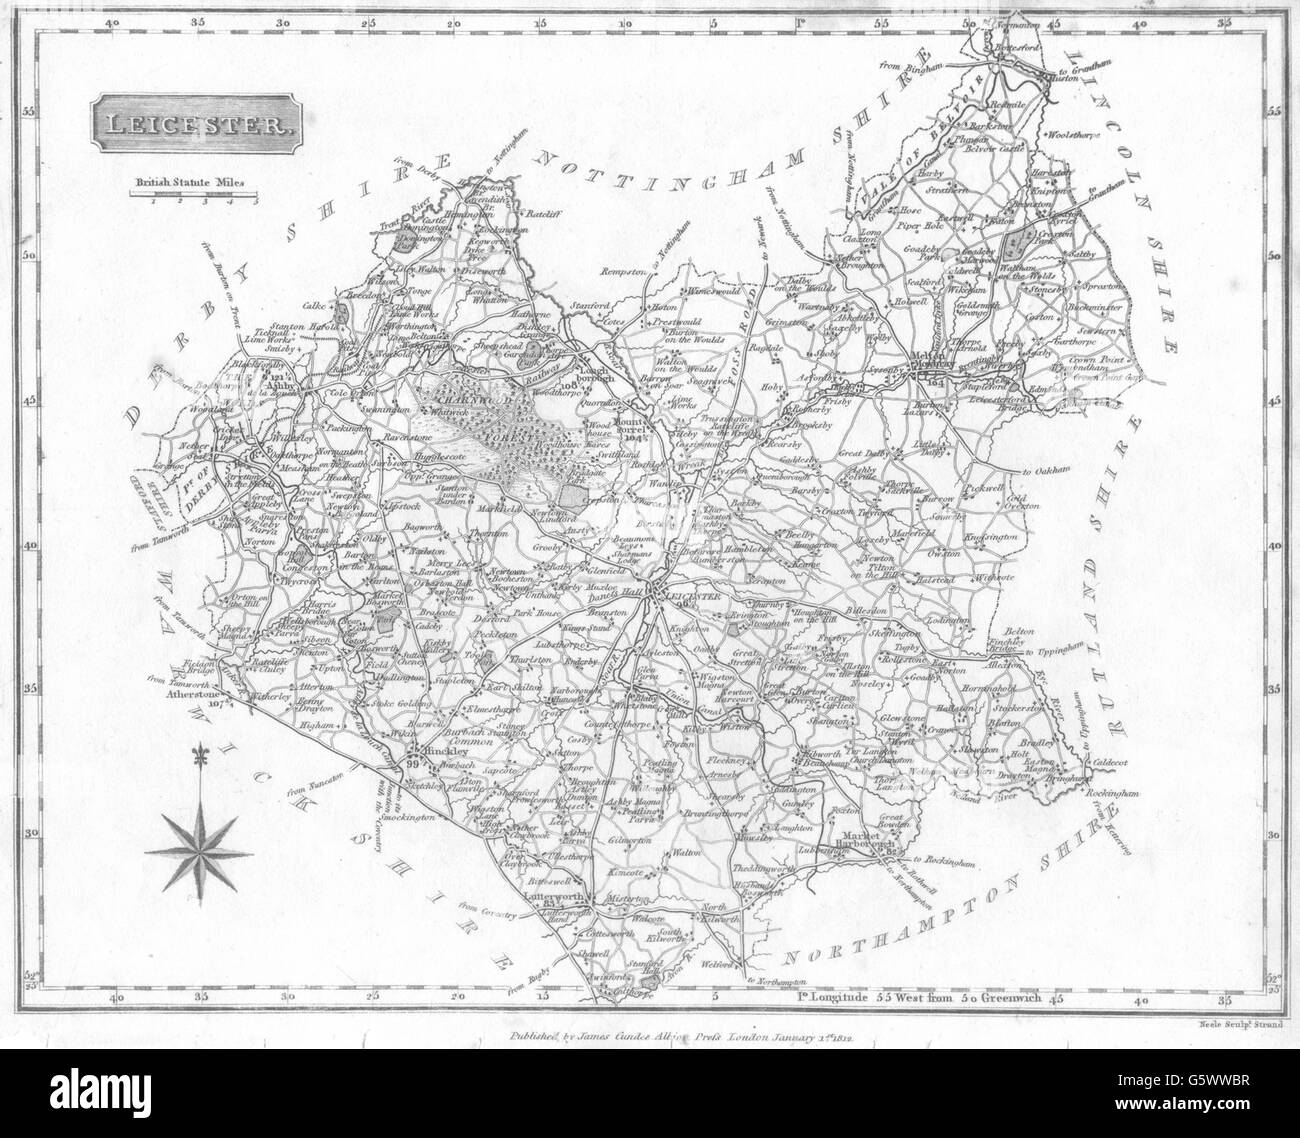 LEICESTERSHIRE: Leics Neele: Titel geschlüpft. Kompass. MFE: Leicester, 1812 Karte Stockfoto